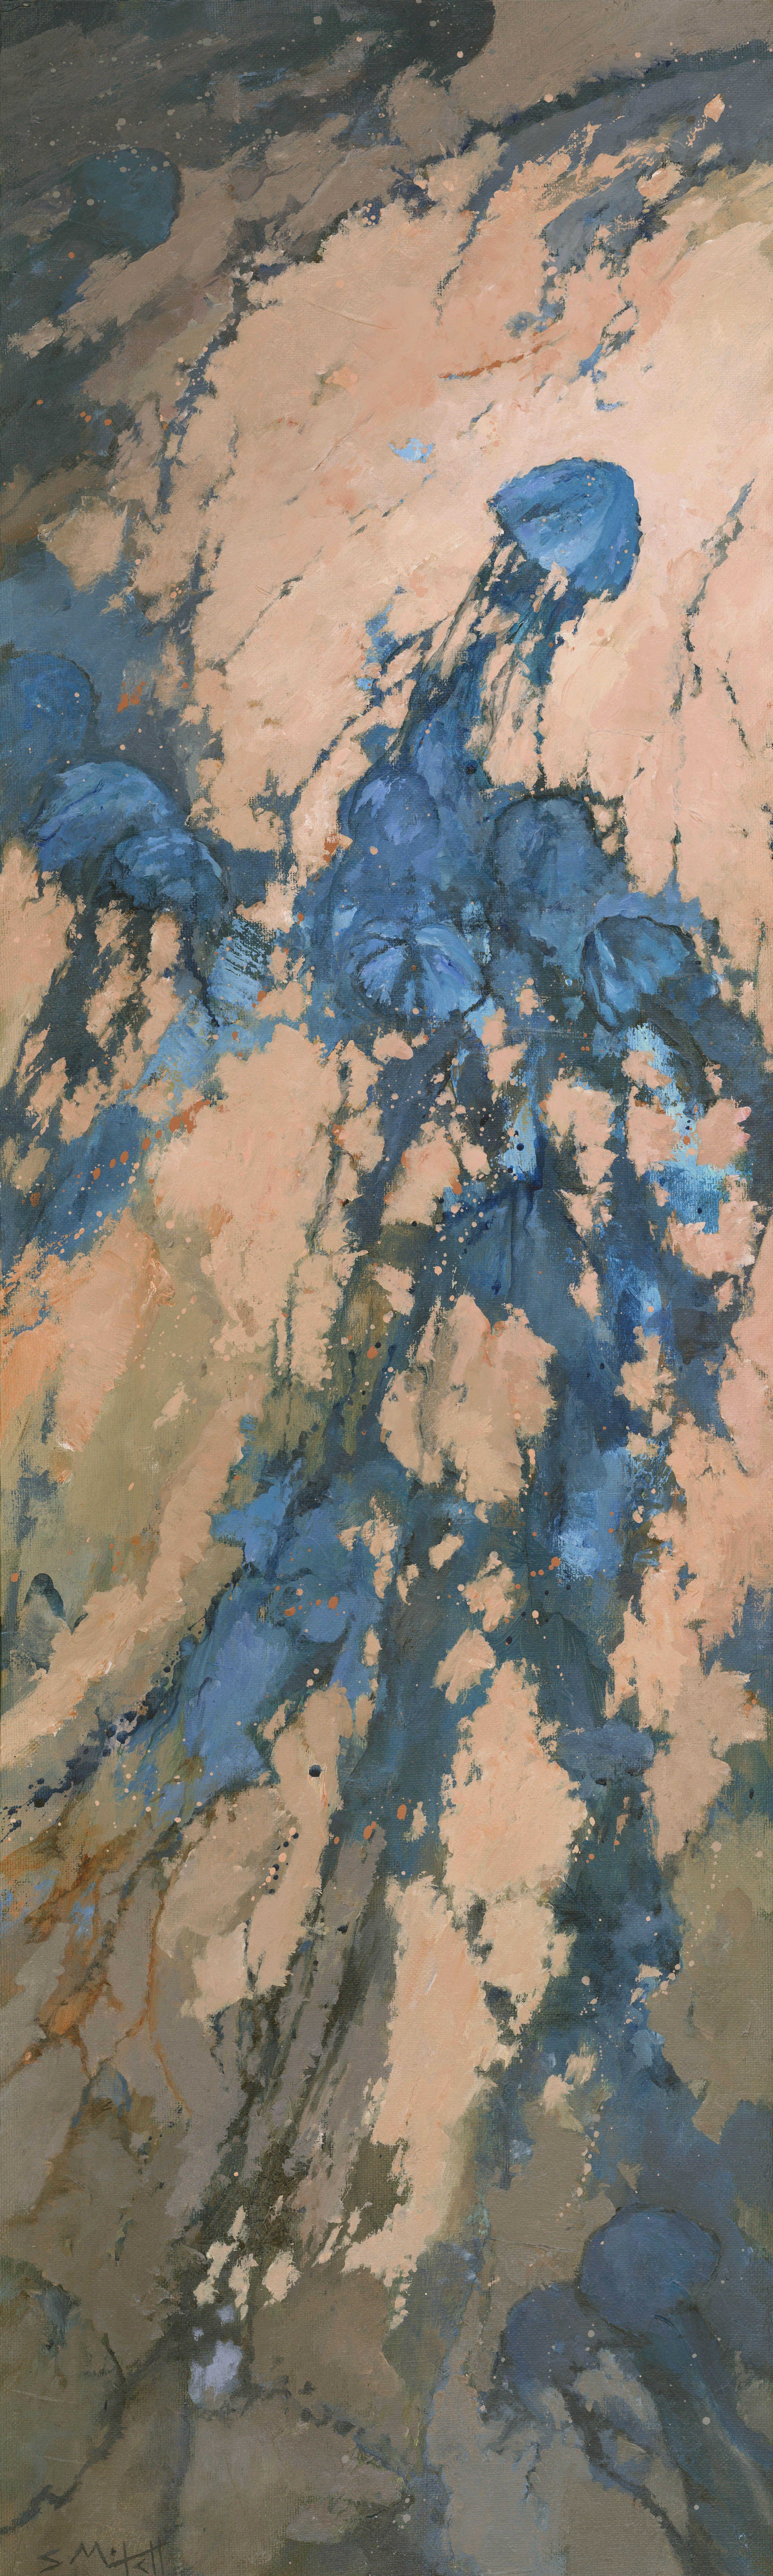 Abstract Painting Stephen Mitchell - Zenith bleu, peinture, acrylique sur toile